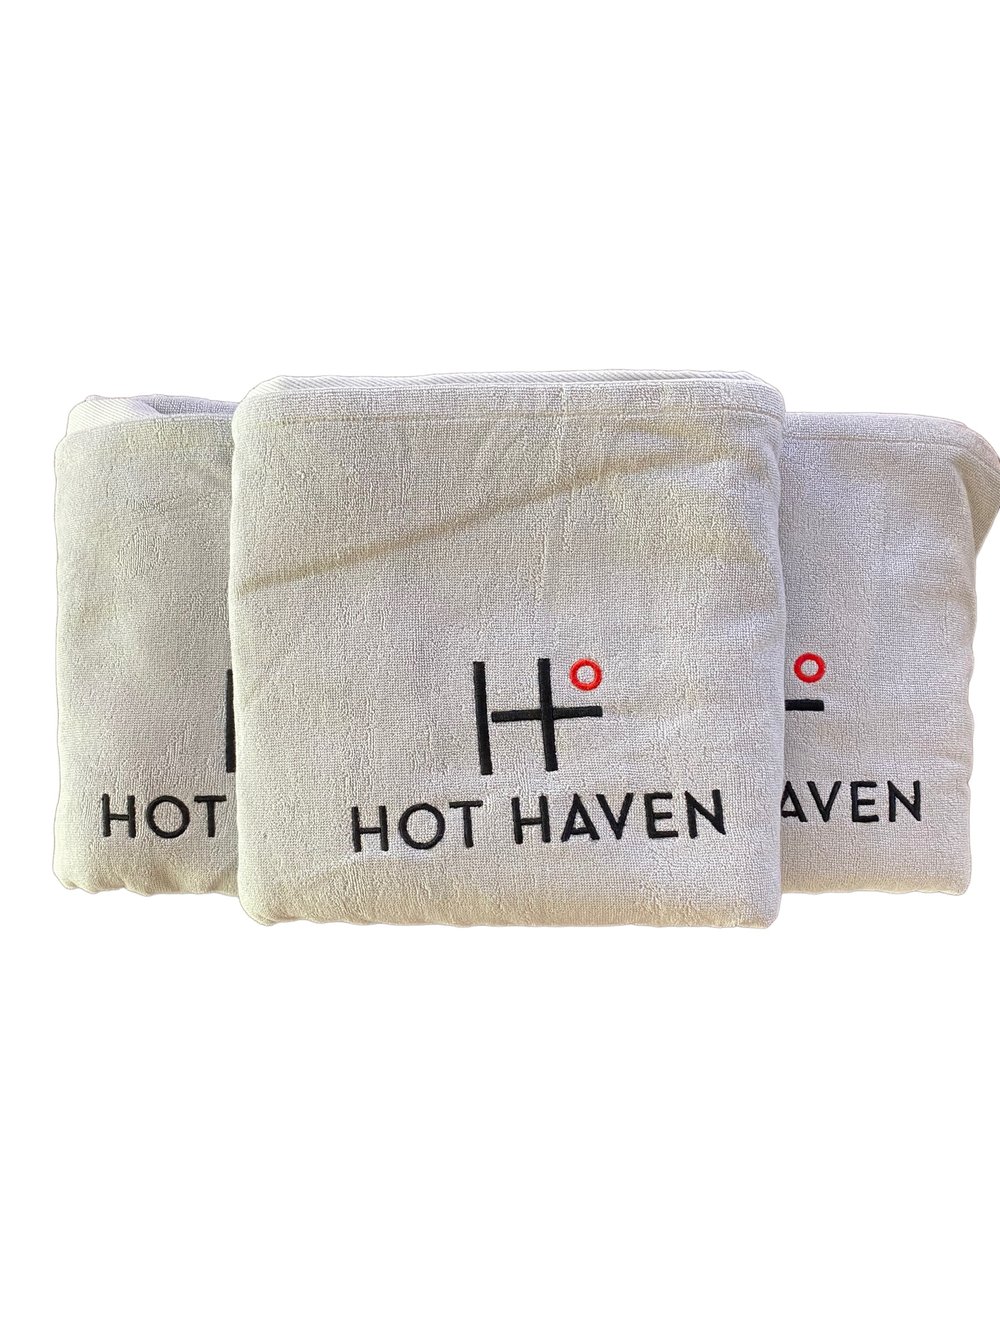 REVIIV Sauna Blanket Insert Towel Kit - Luxurious Bamboo & Cotton Moisture  Wicking Sauna Towels for Infrared Sauna Blankets - Hygienic Barrier for